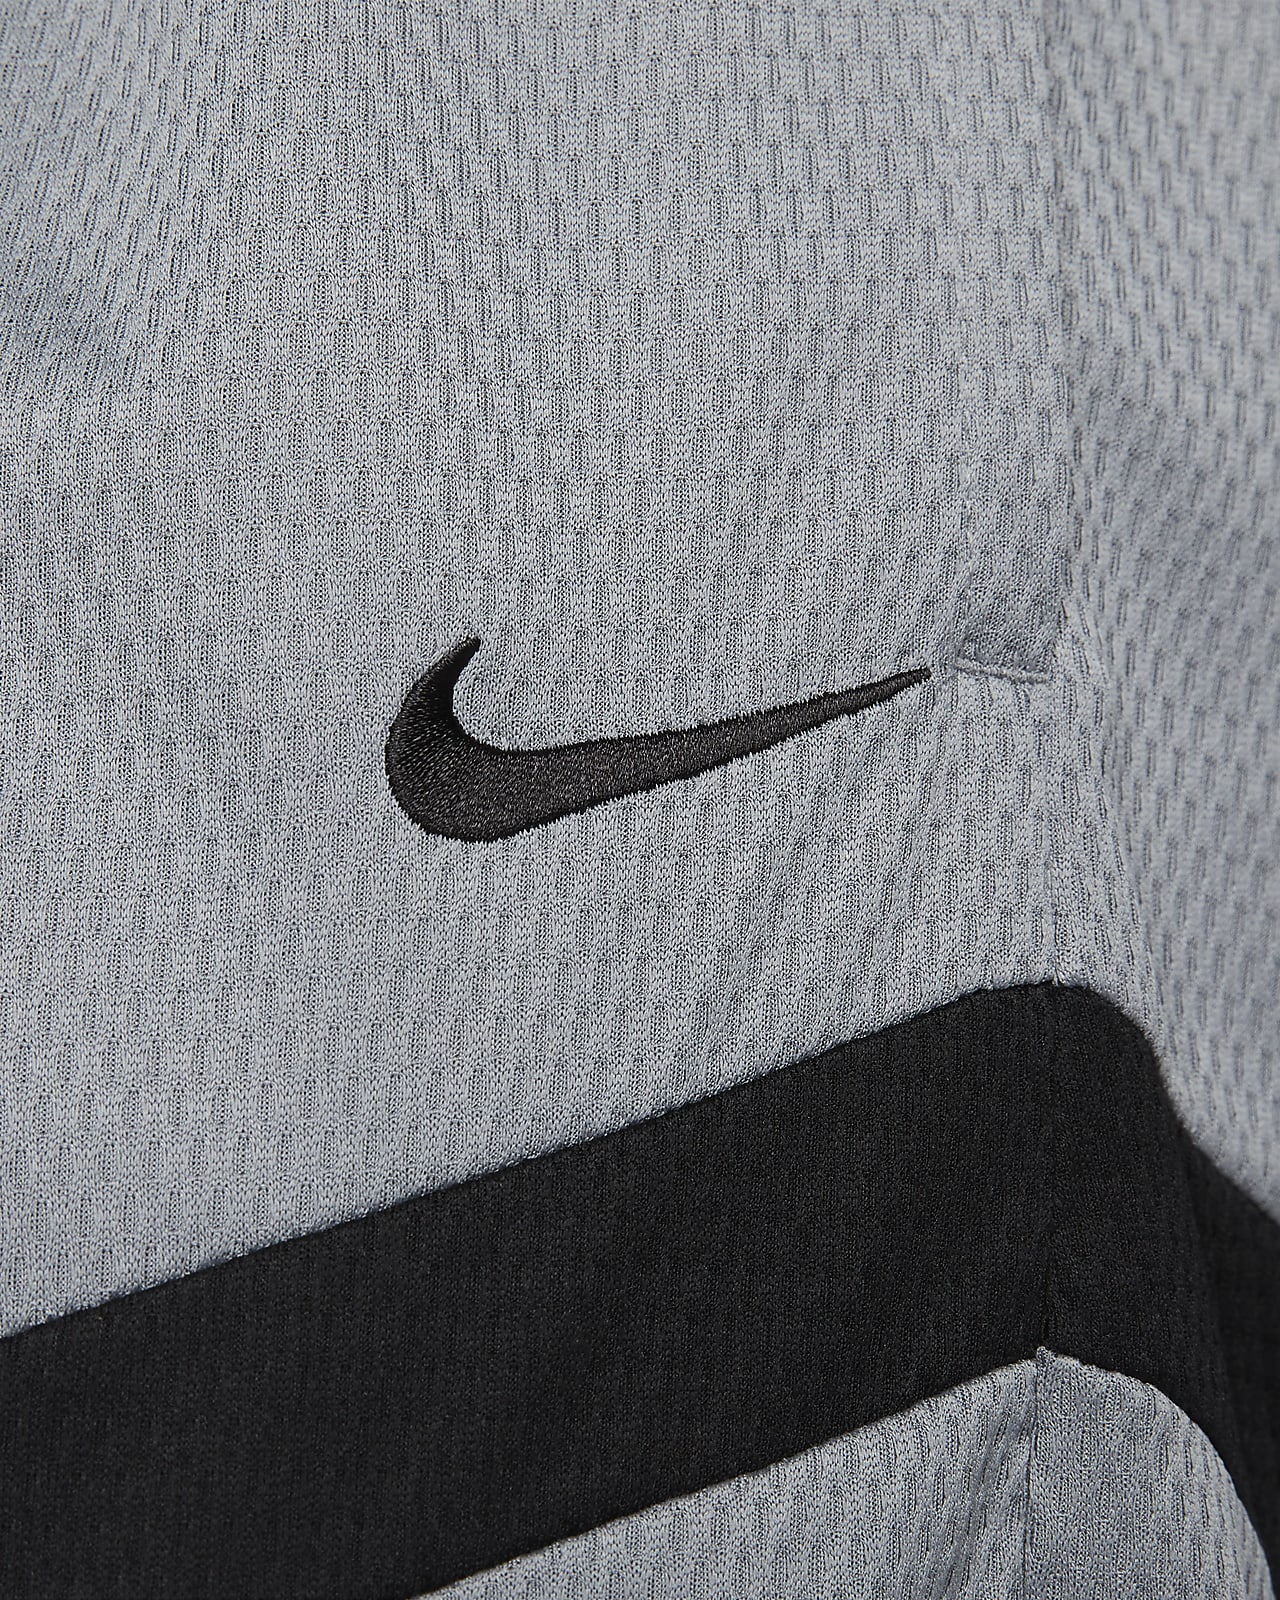 Nike Basketball Swoosh Logo Shorts in Gray for Men